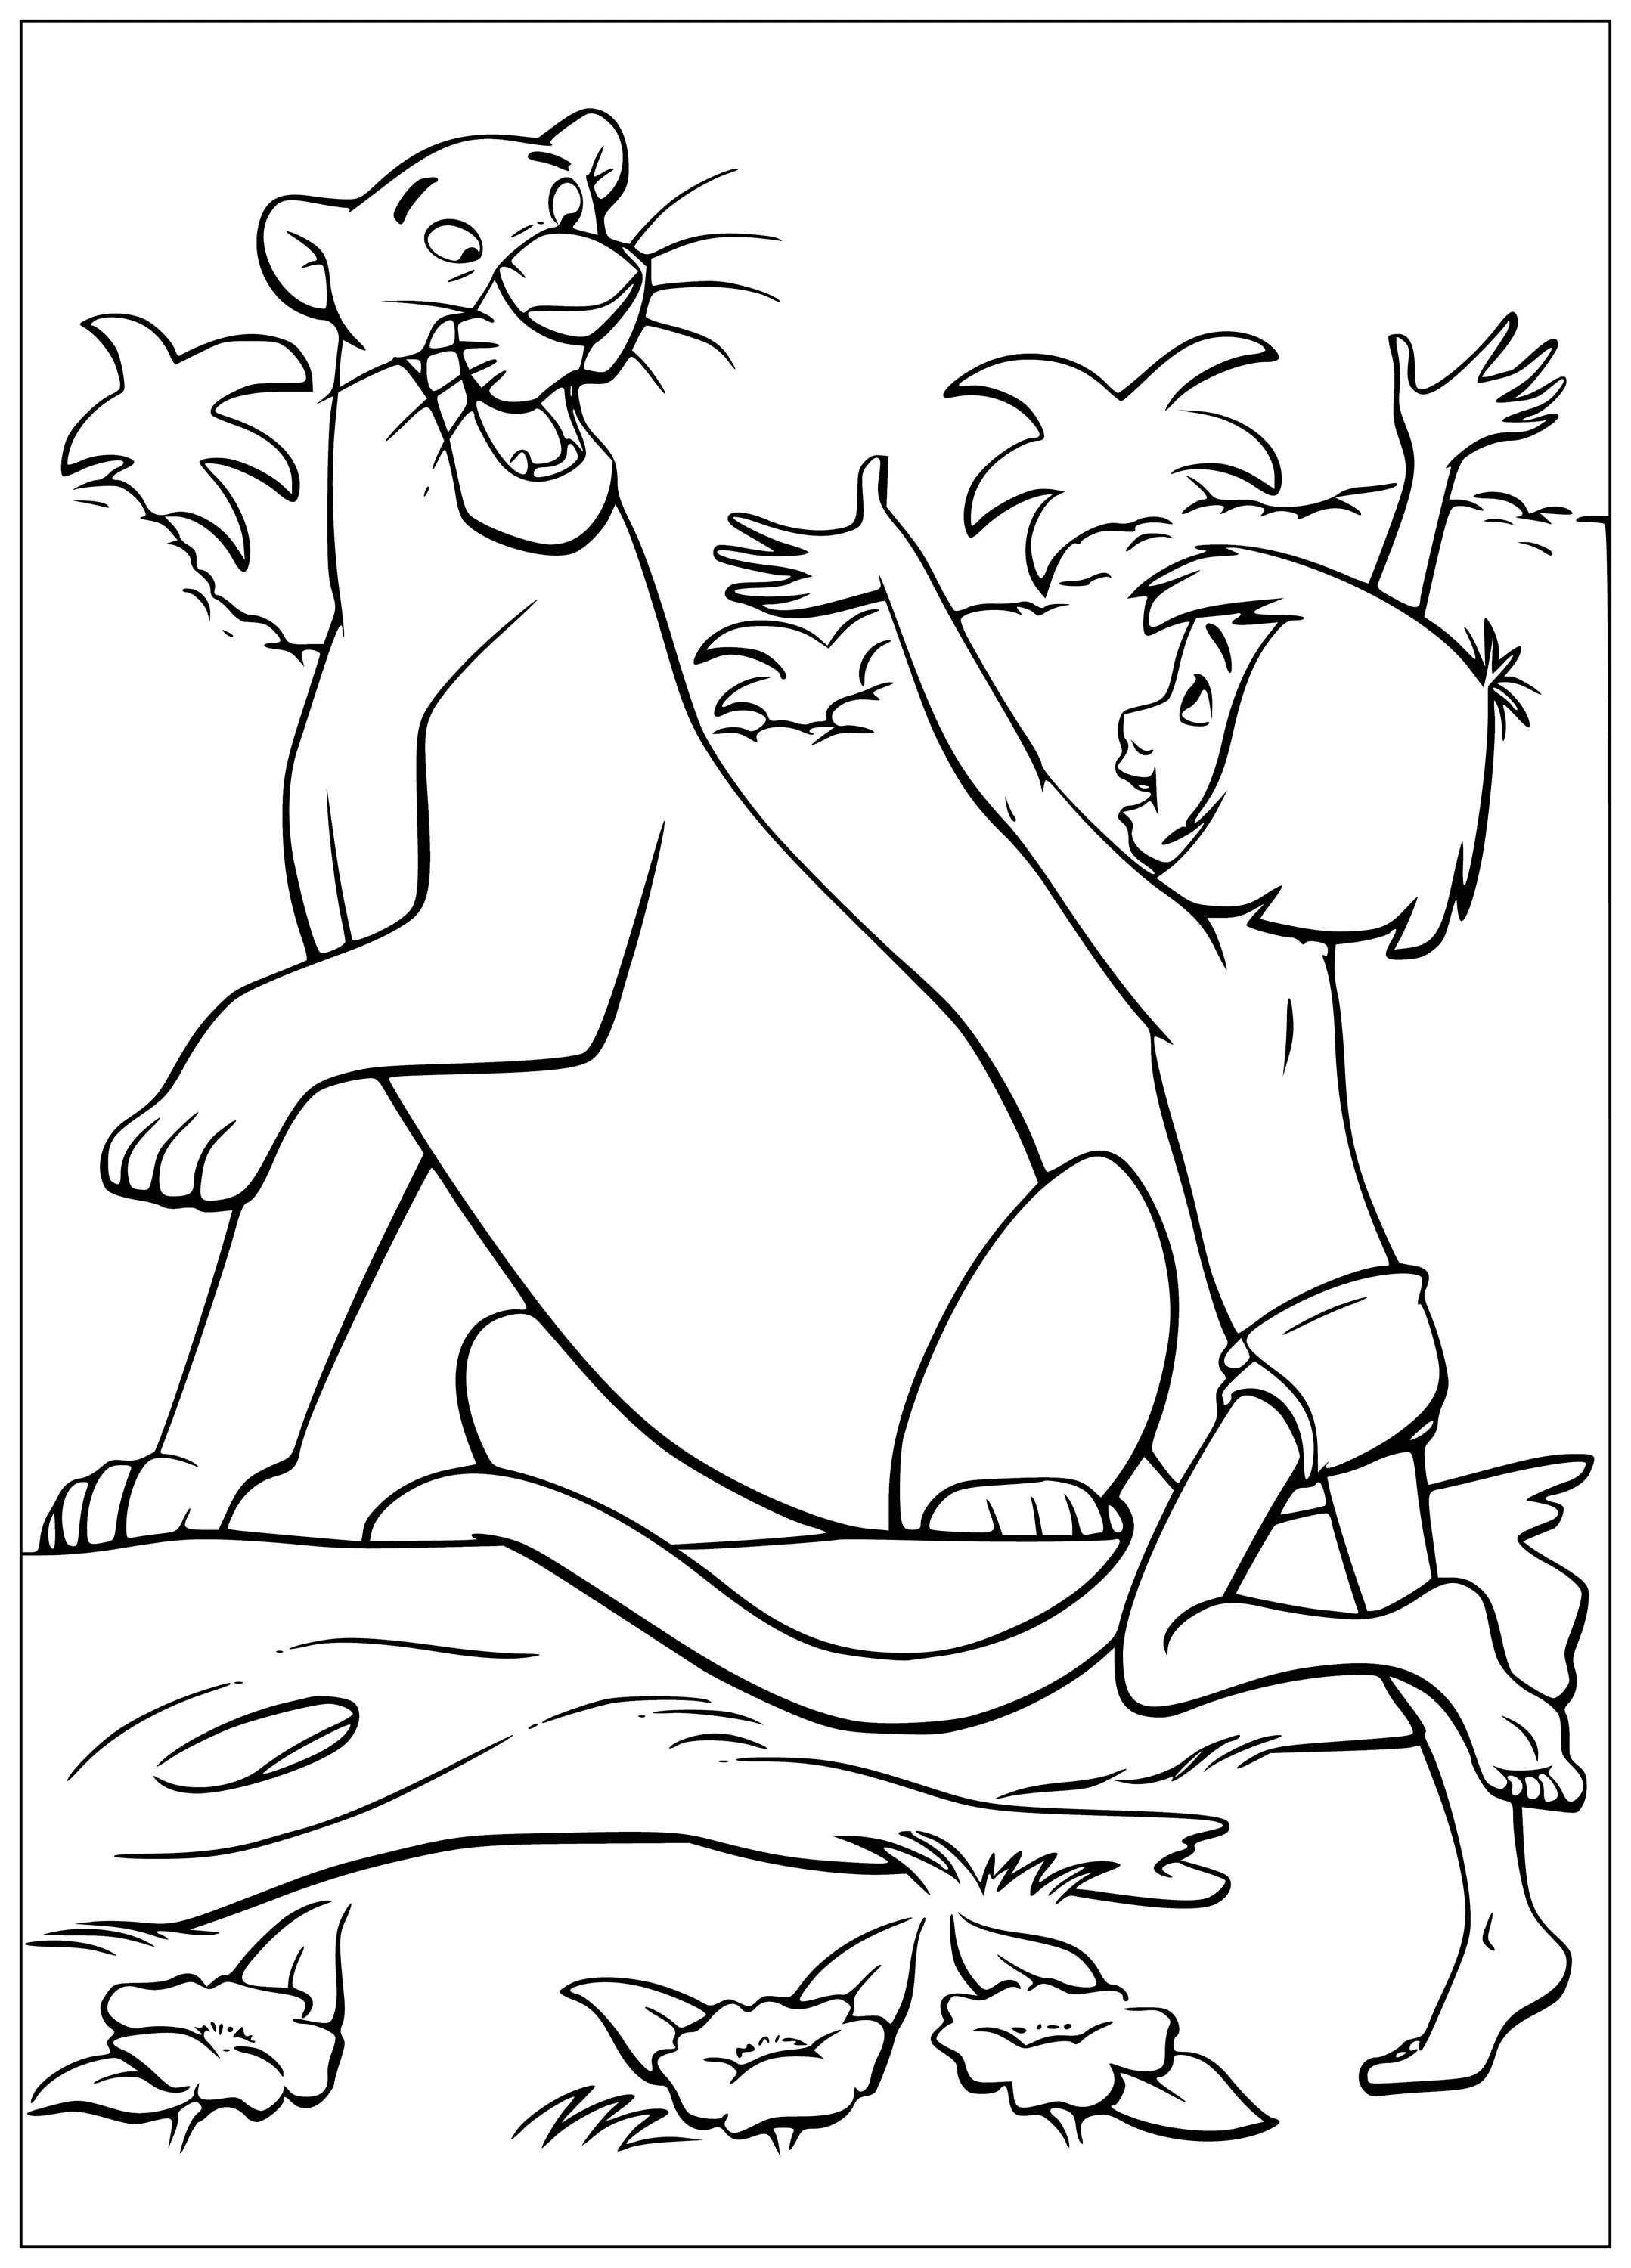 Live Mowgli and Bagheera coloring book